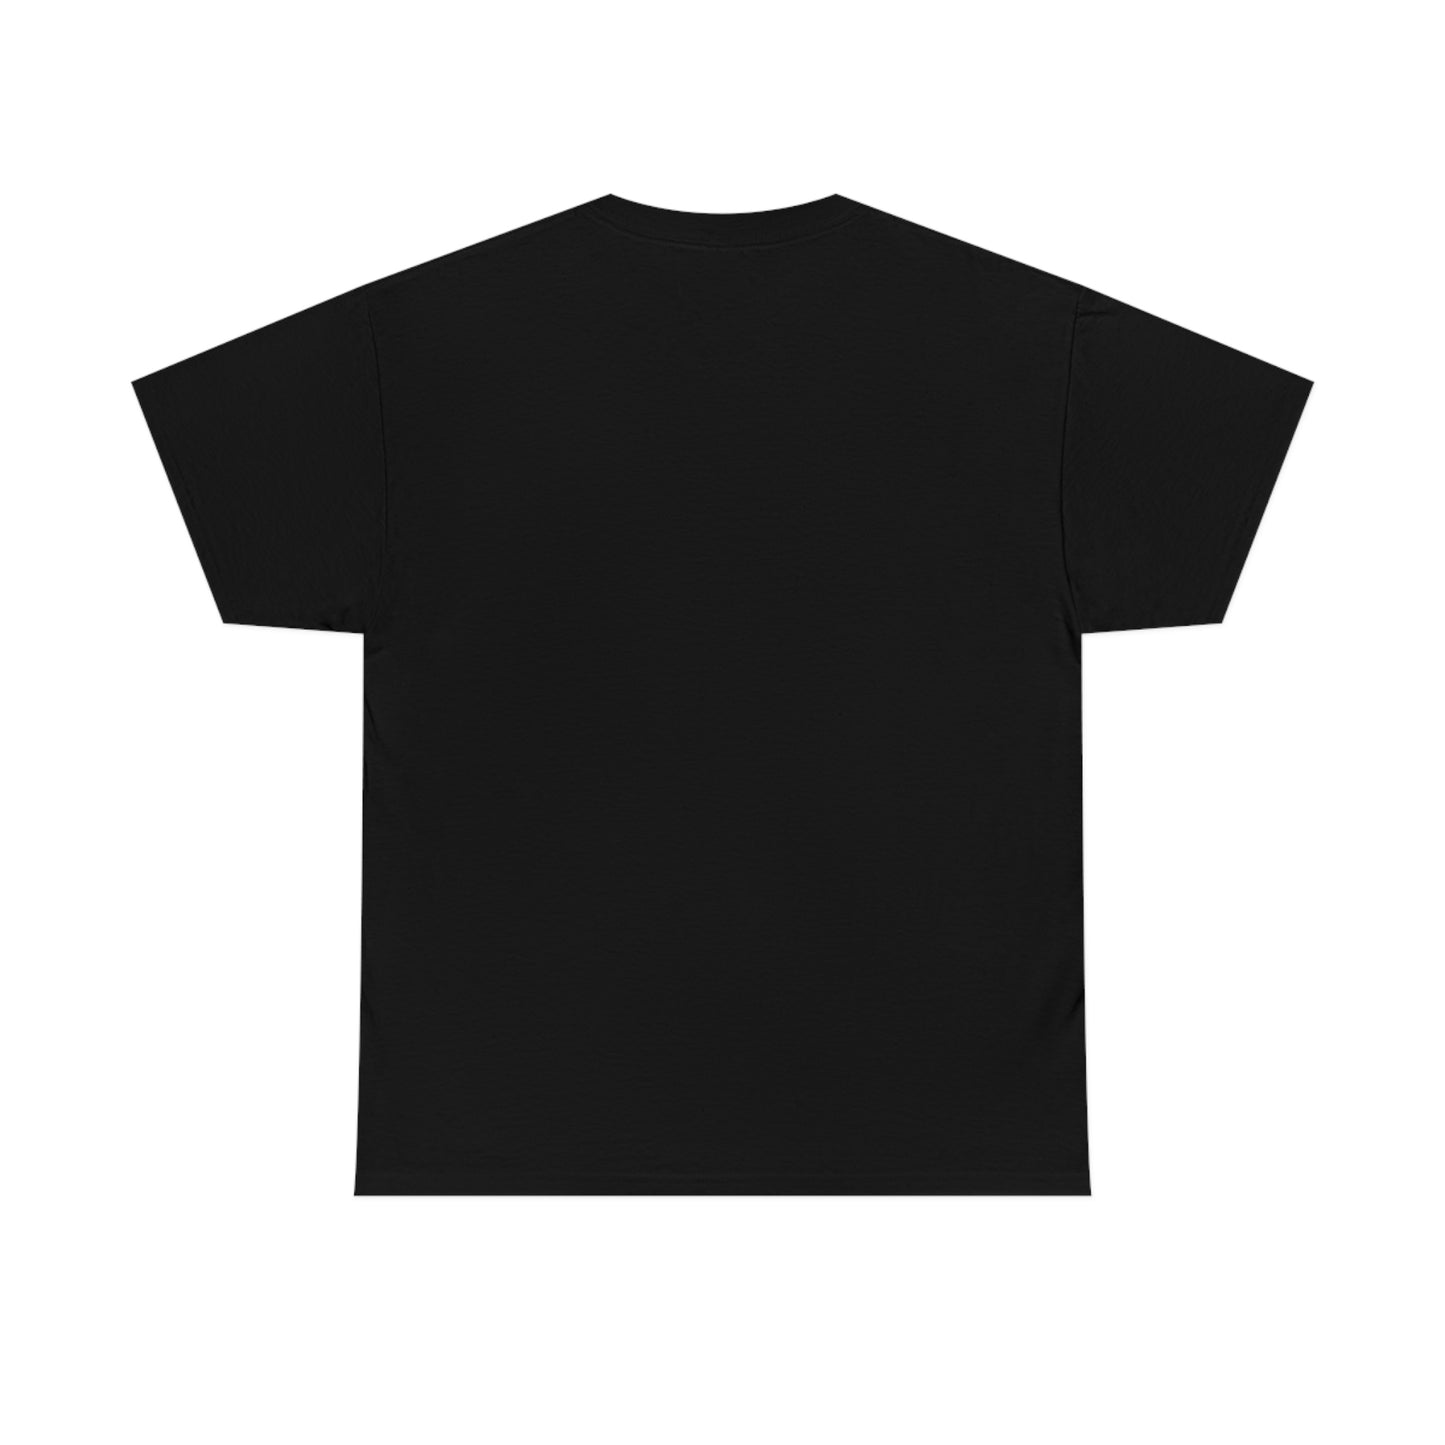 Pawn Star T - Shirt